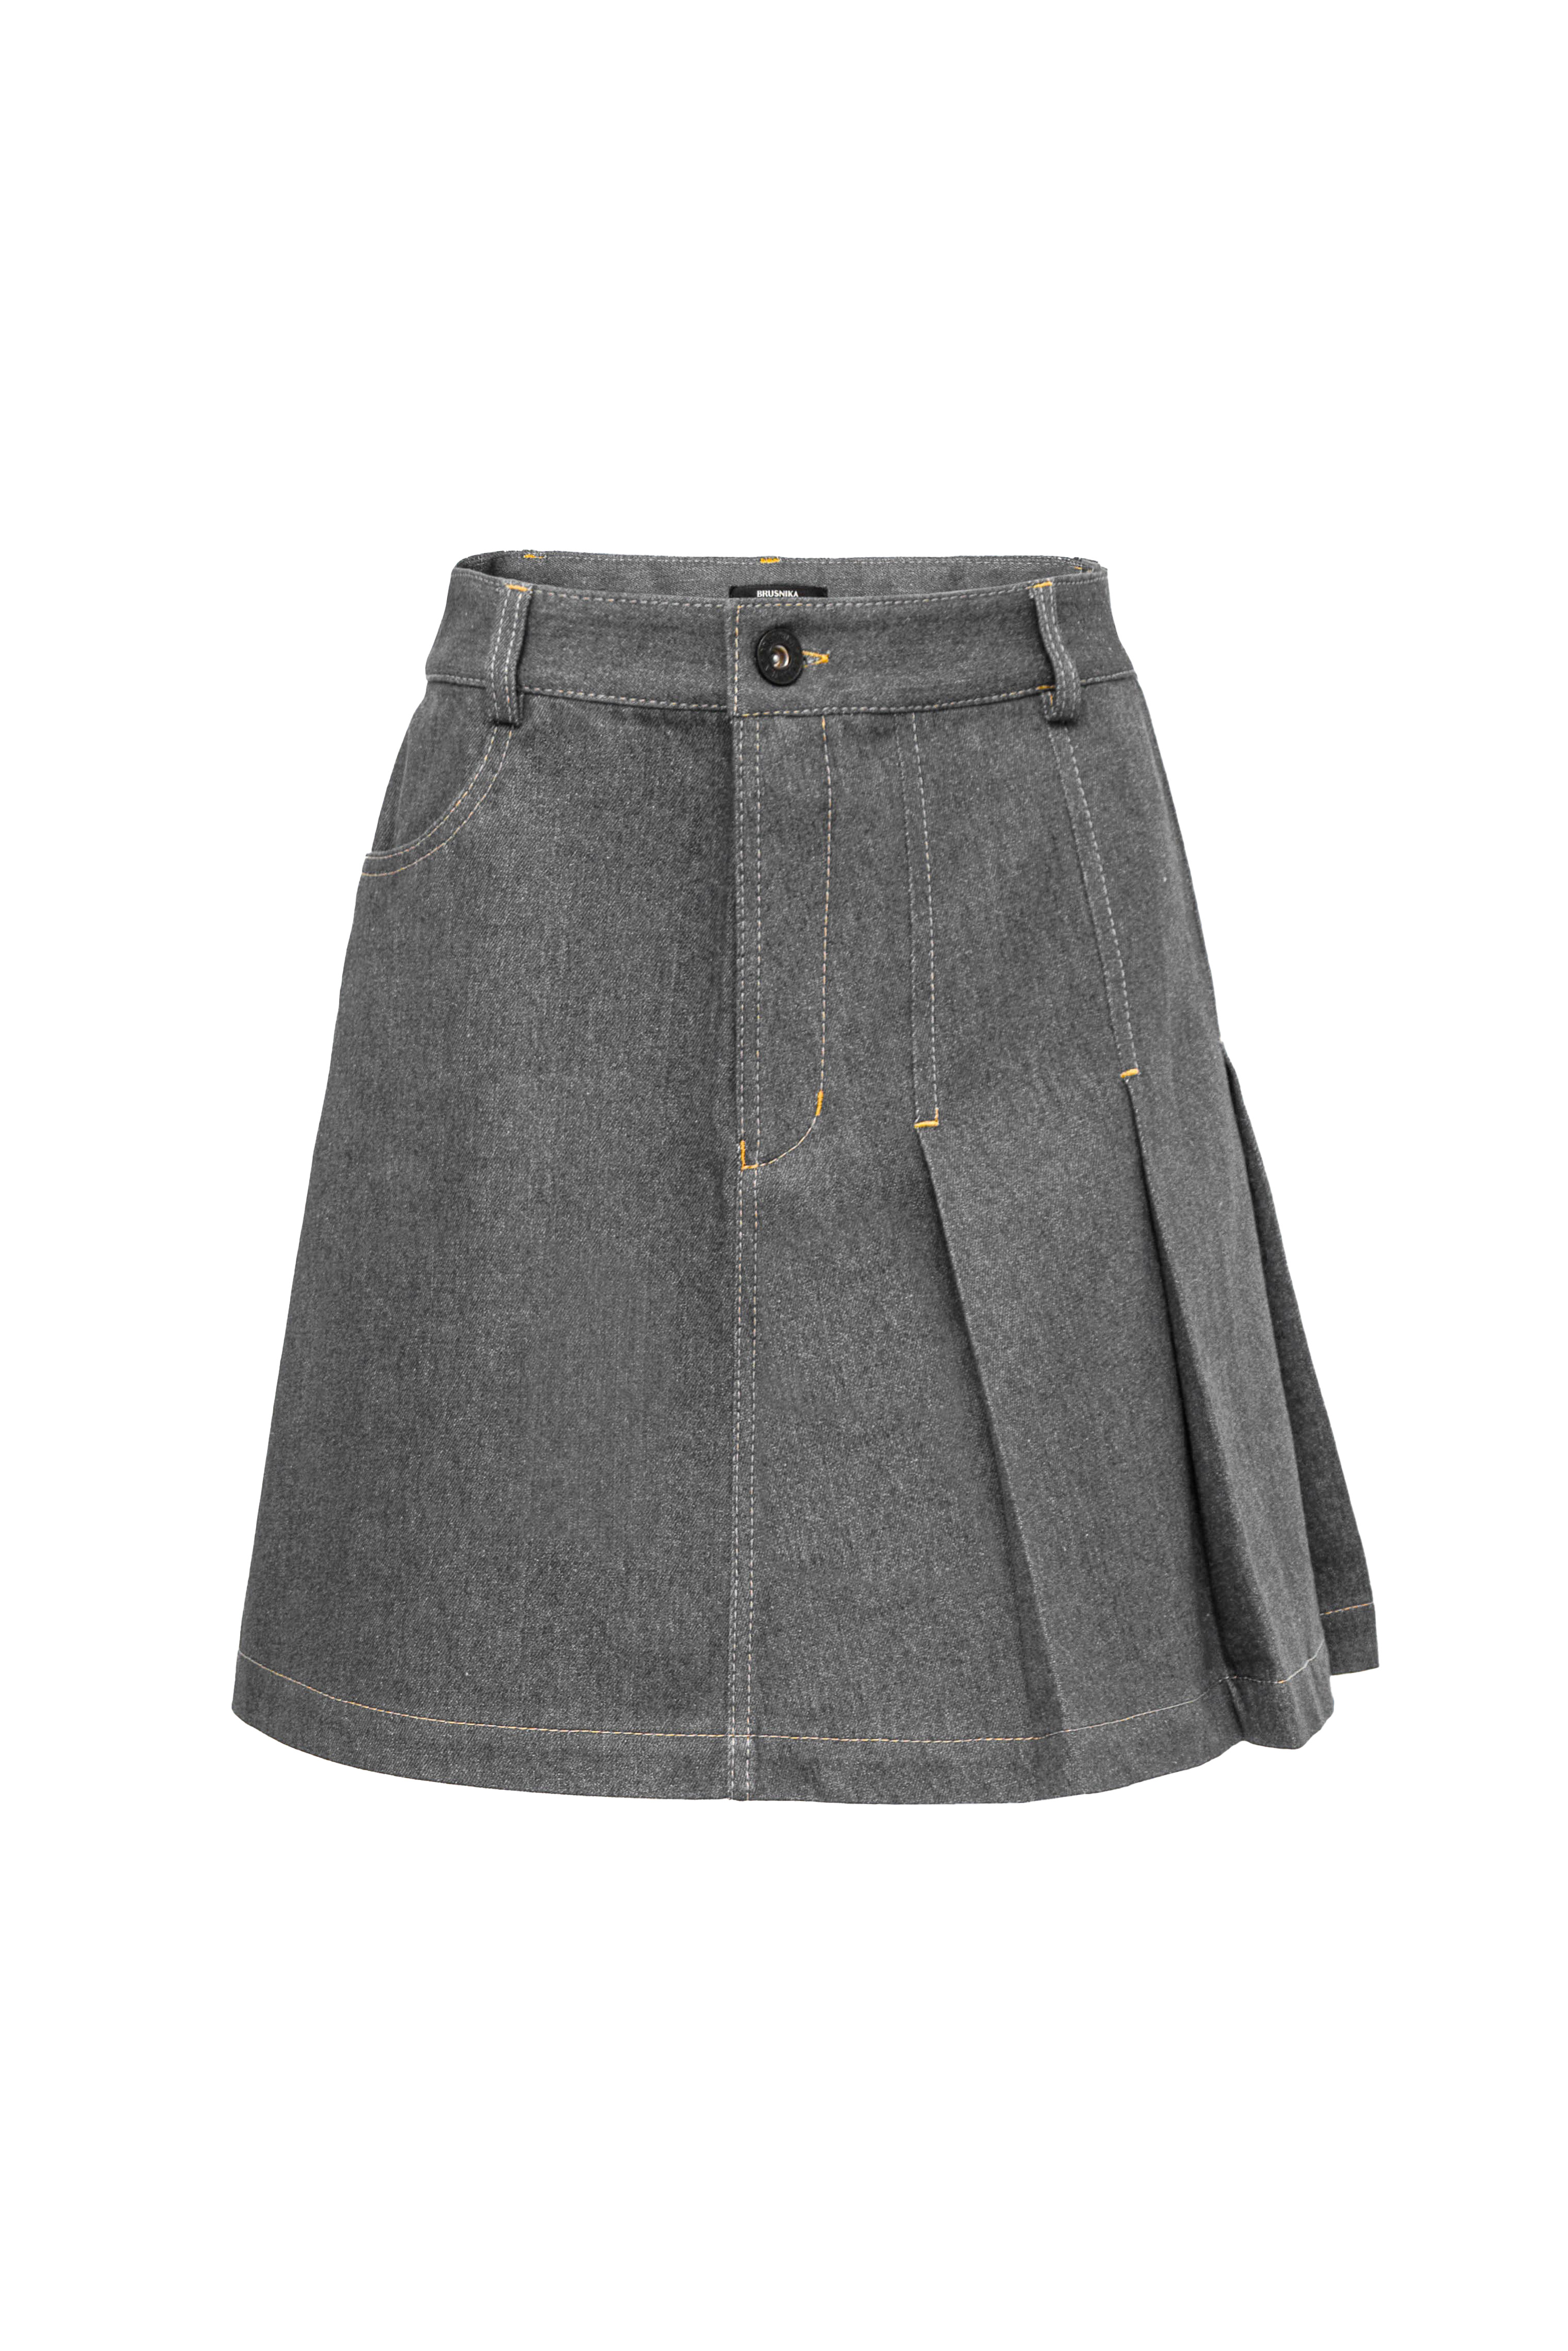 Skirt 4238-04 Grey from BRUSNiKA